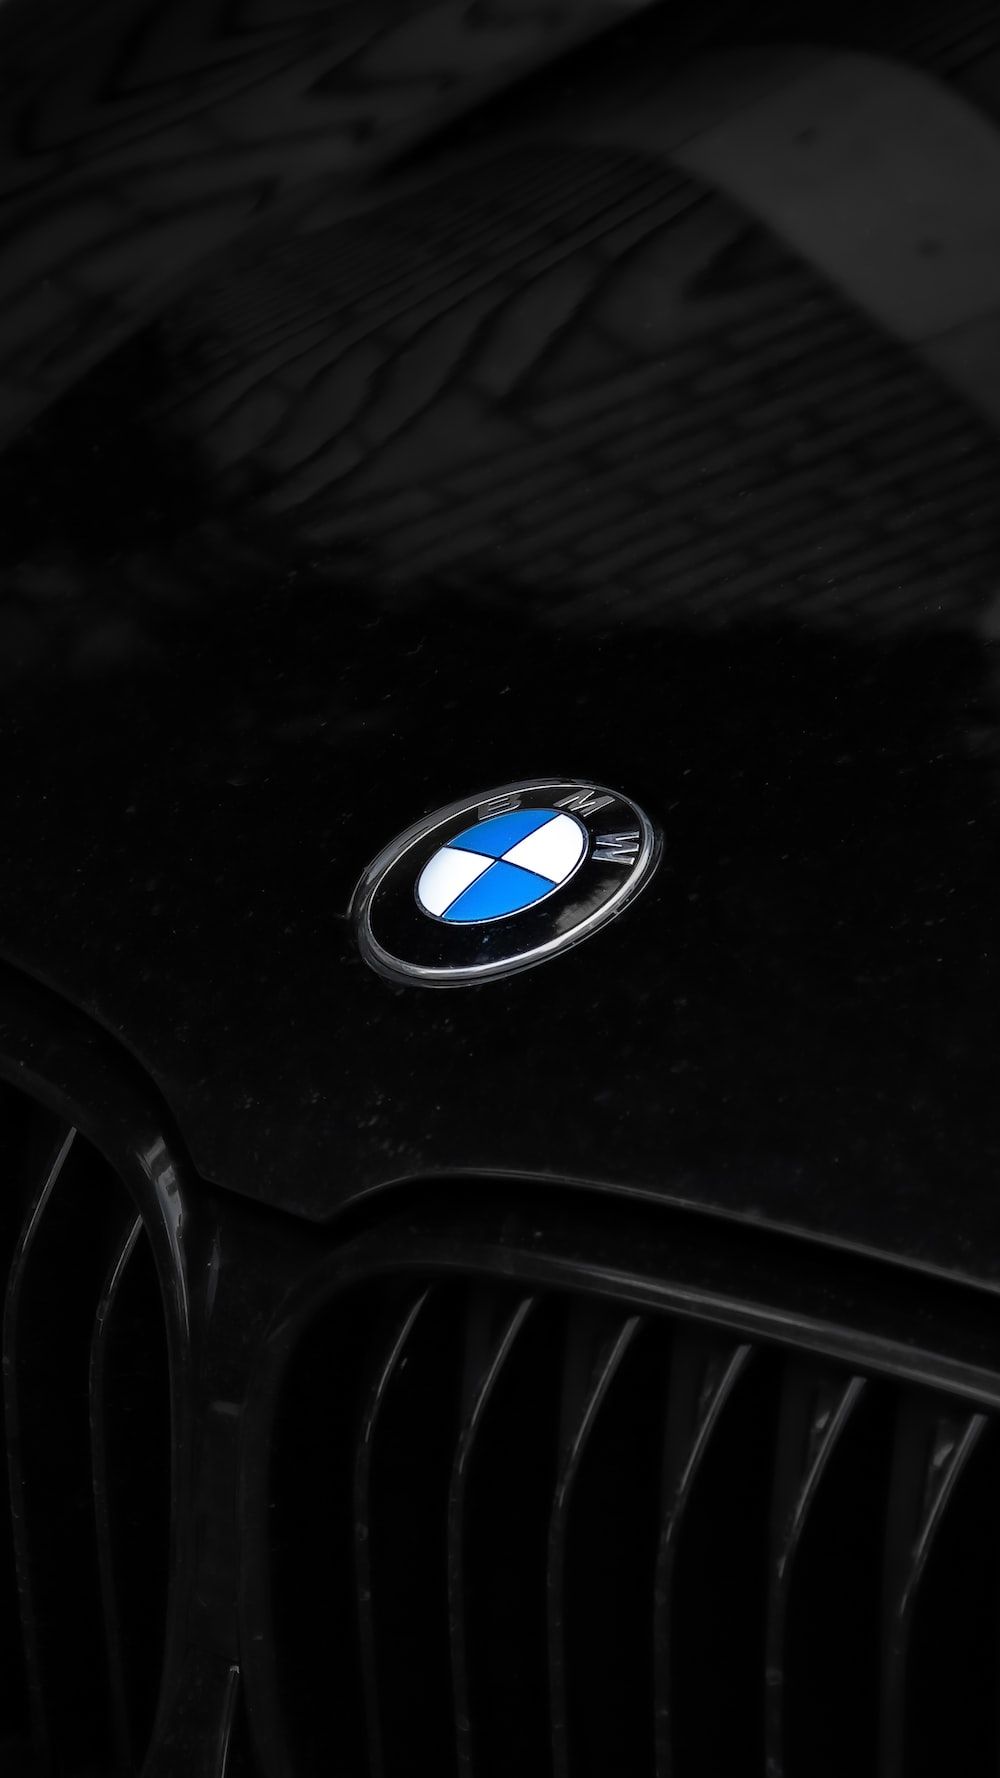  BMW Hintergrundbild 1000x1778. Foto zum Thema schwarzes BMW PKW Lenkrad